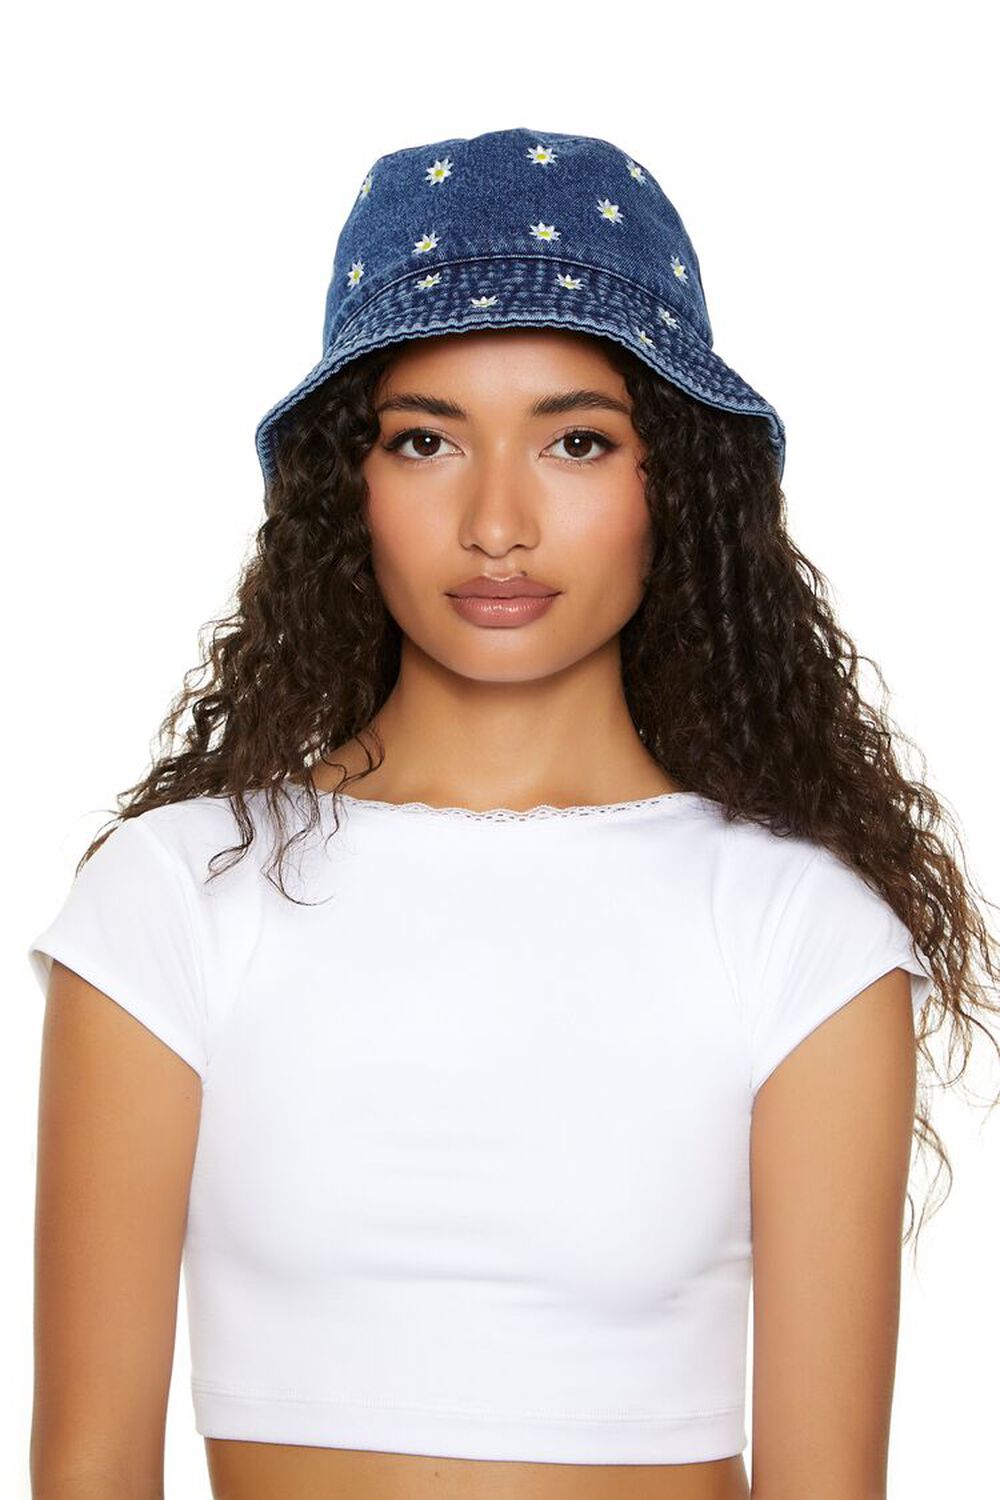 Forever 21 Hello Kitty Denim Womens Bucket Hat | Blue | One Size | Hats Bucket Hats